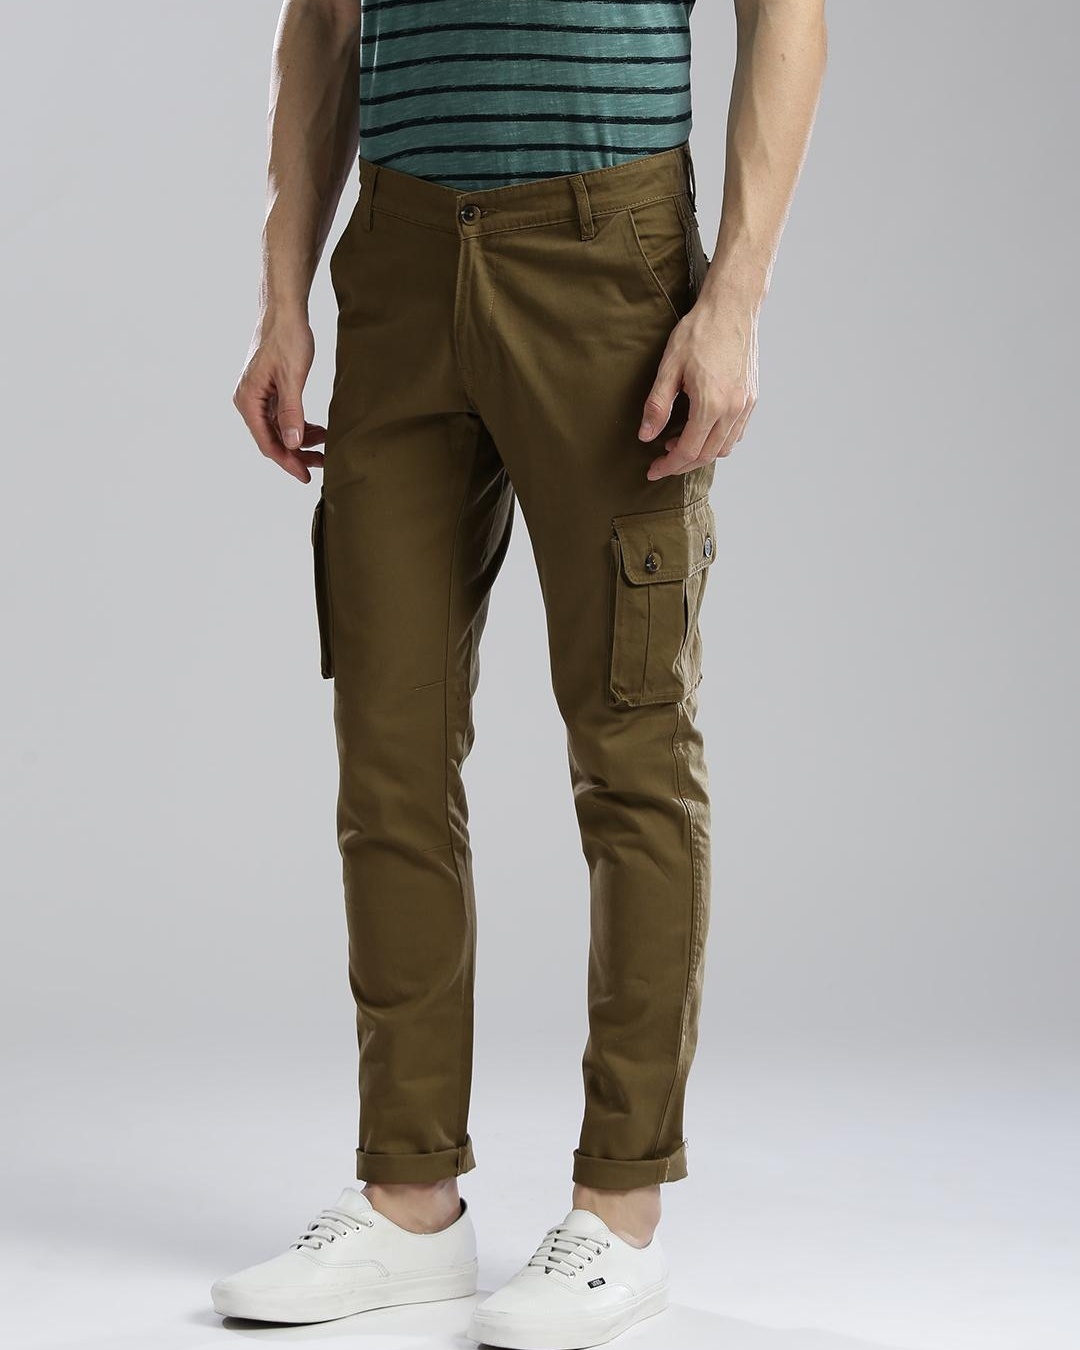 Buy Hubberholme Men's Regular Cargo Trousers (8026_32_Off White at Amazon.in